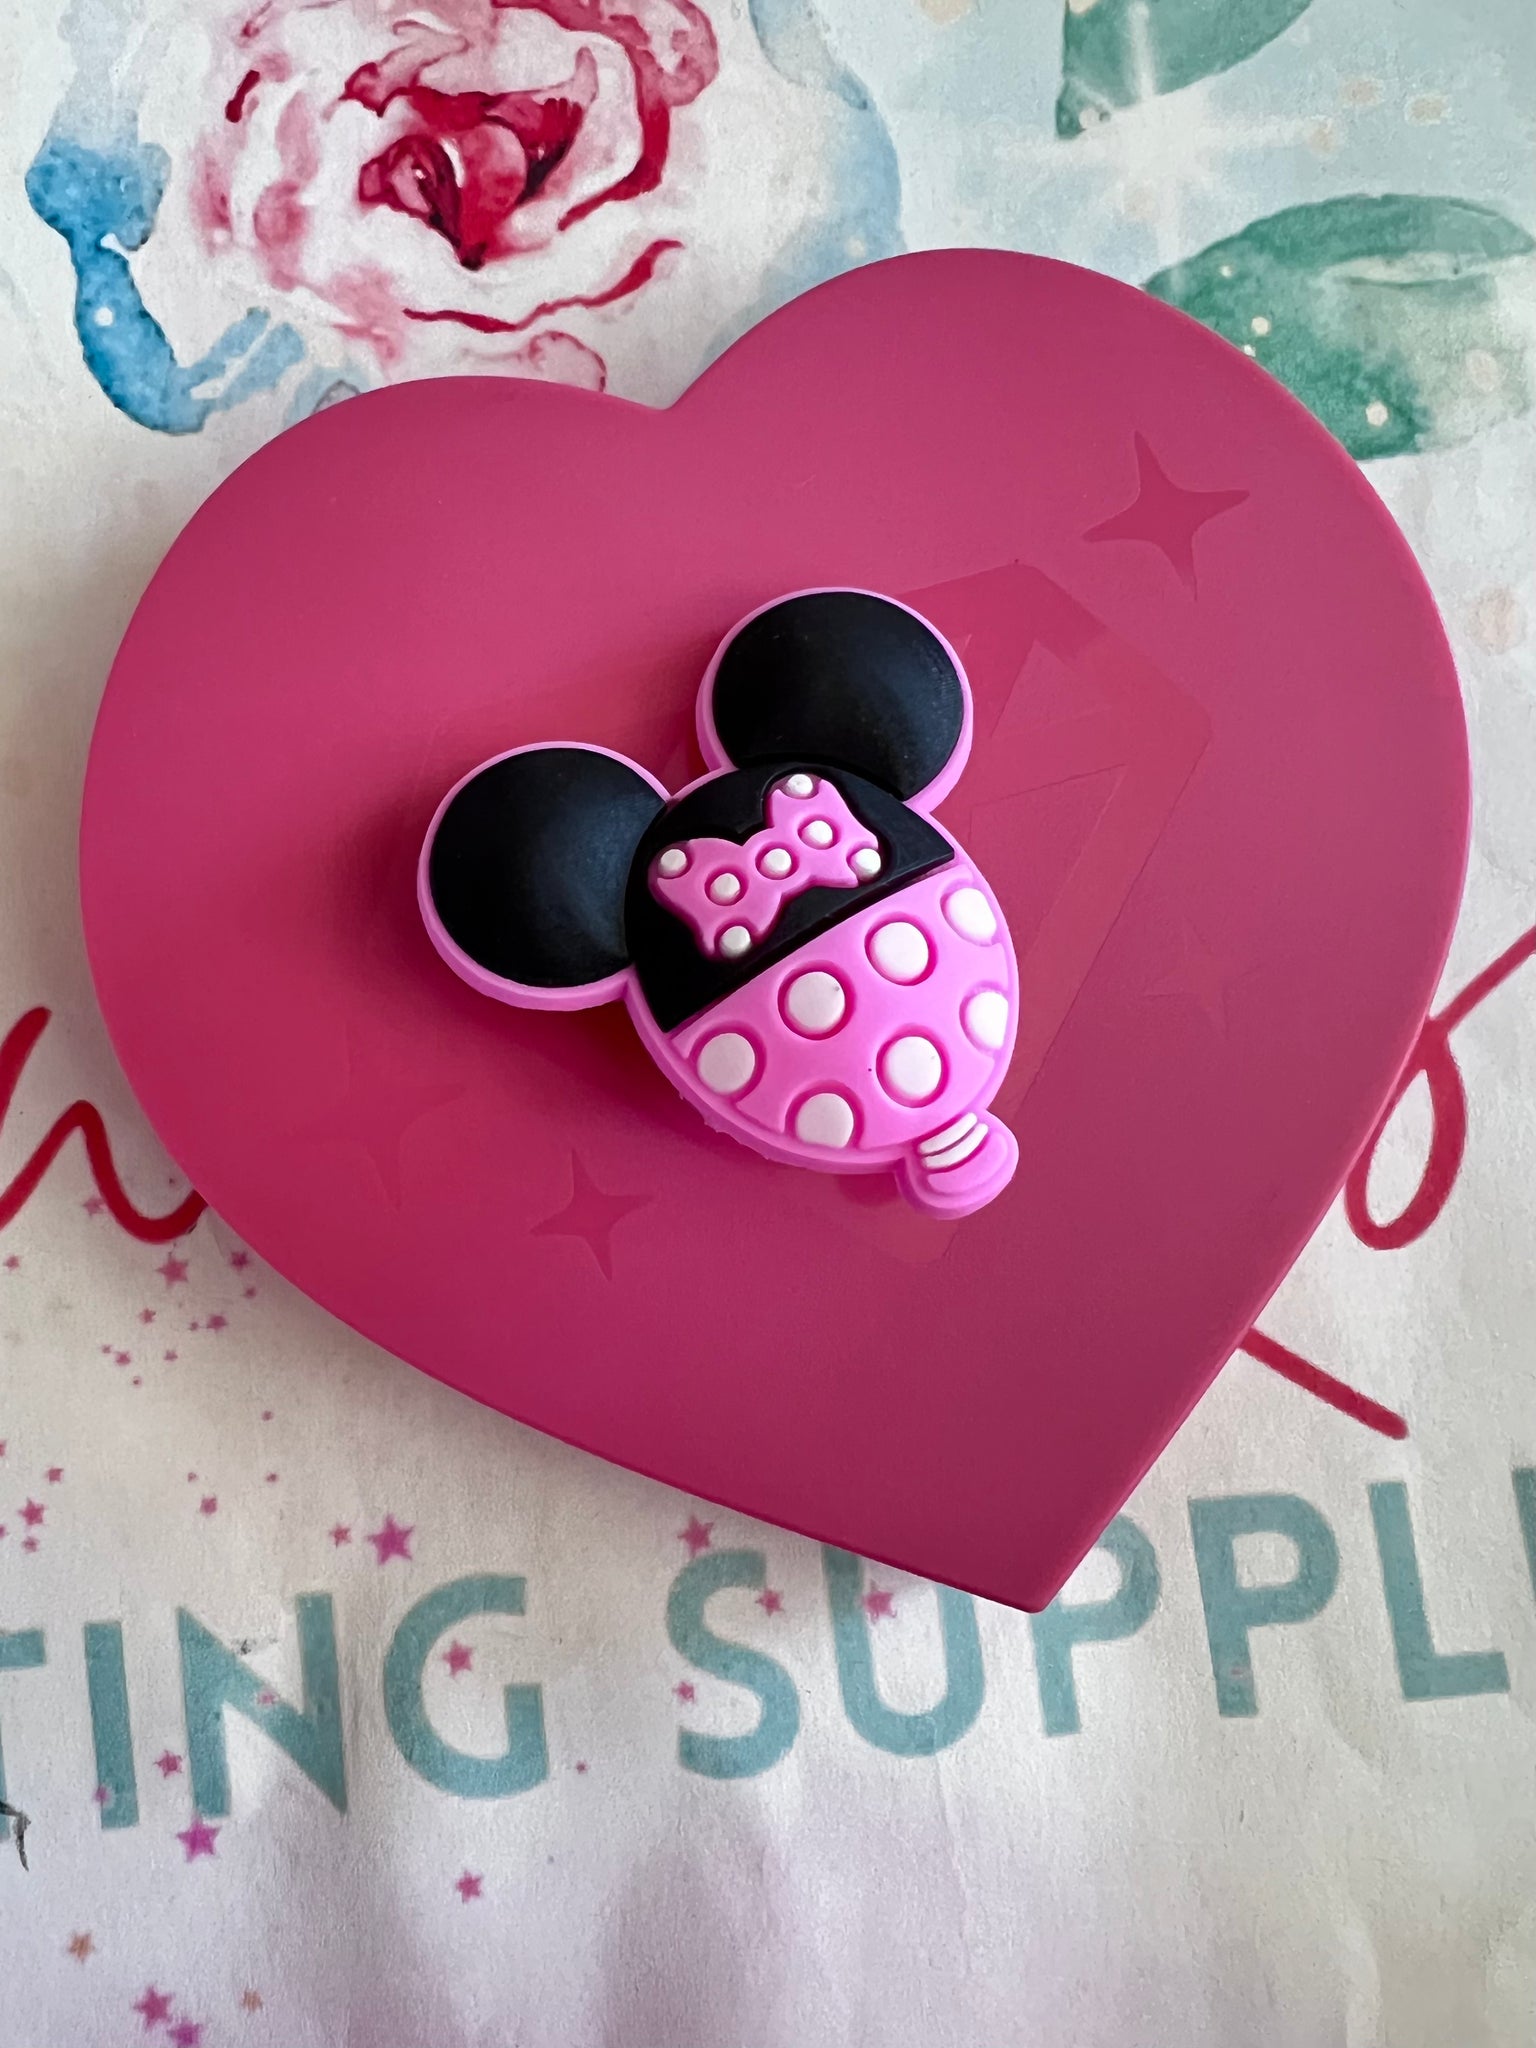 Black/pink mouse balloon charm